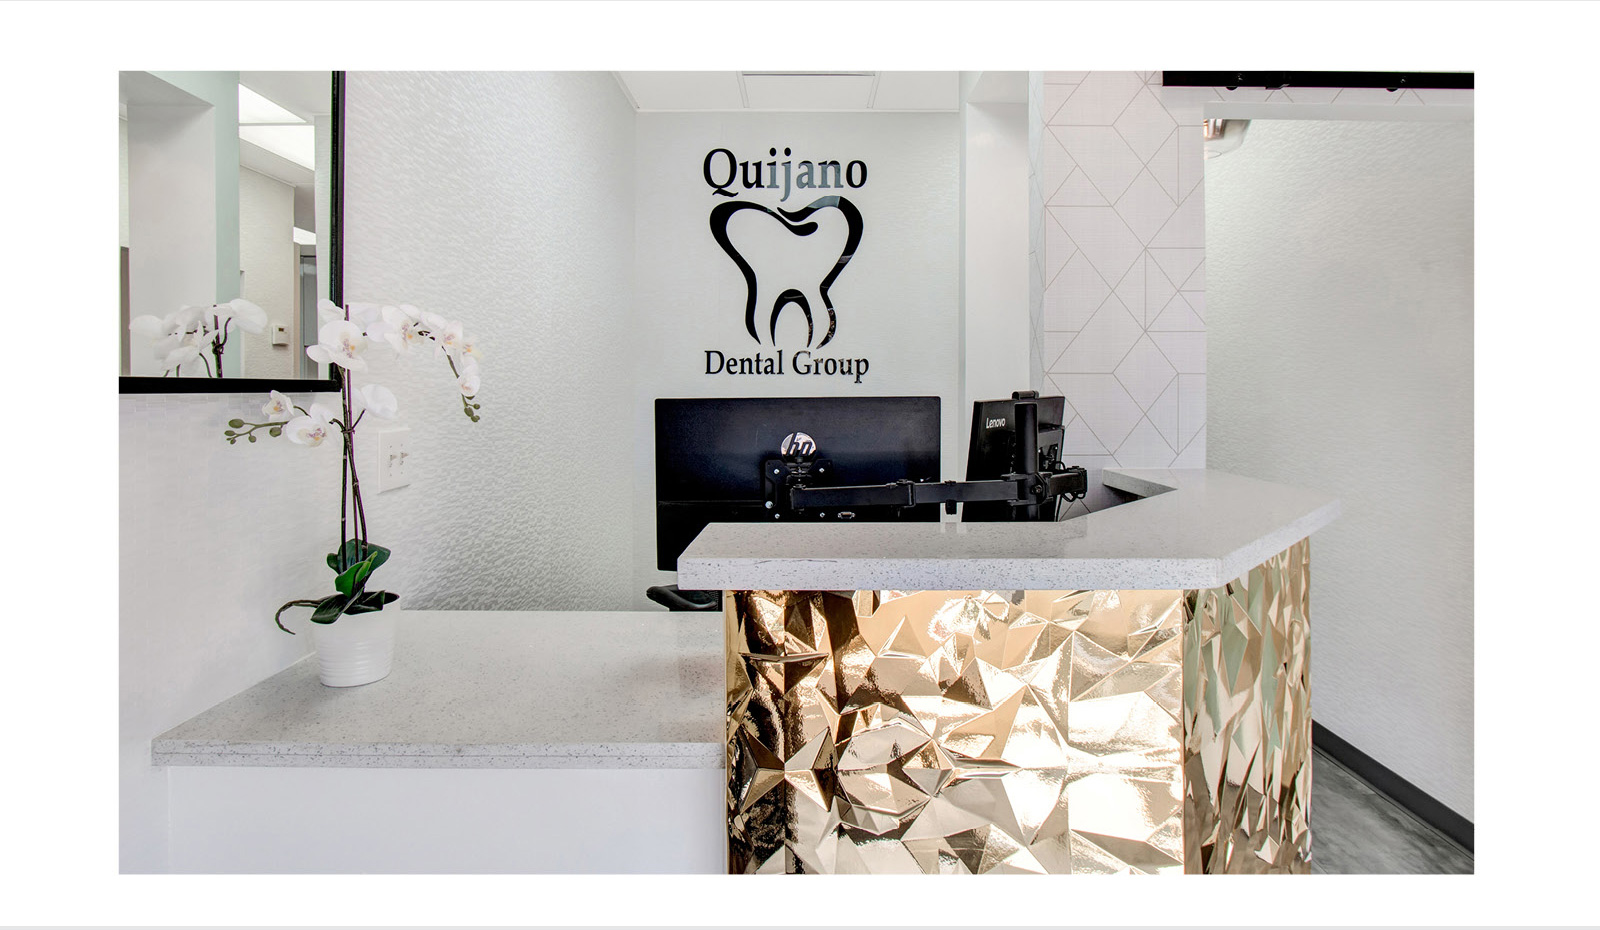 Quijano Dental Group